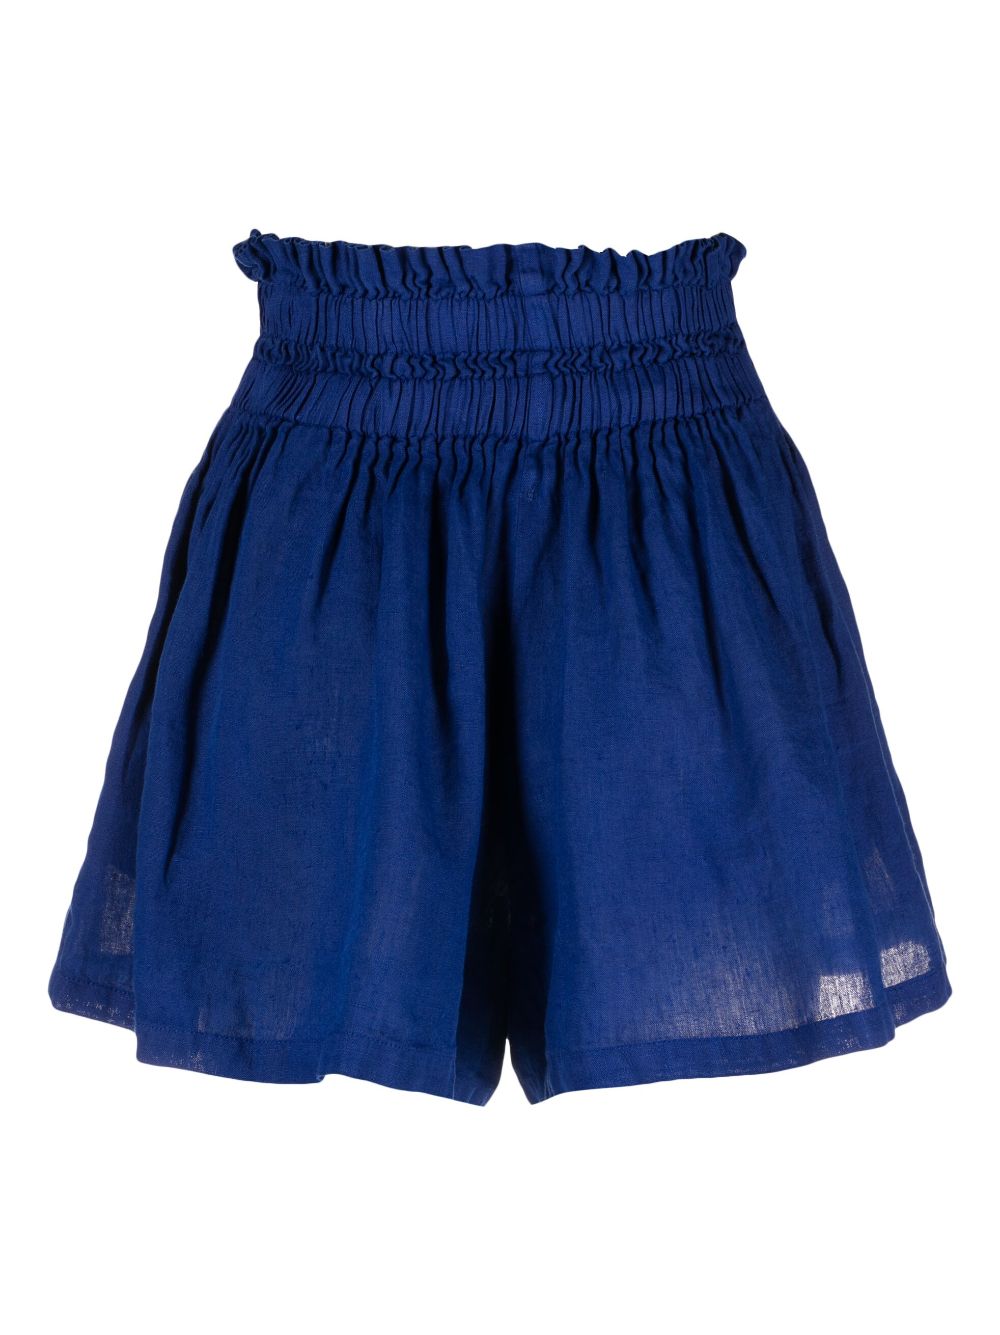 120% Lino Linnen shorts - Blauw